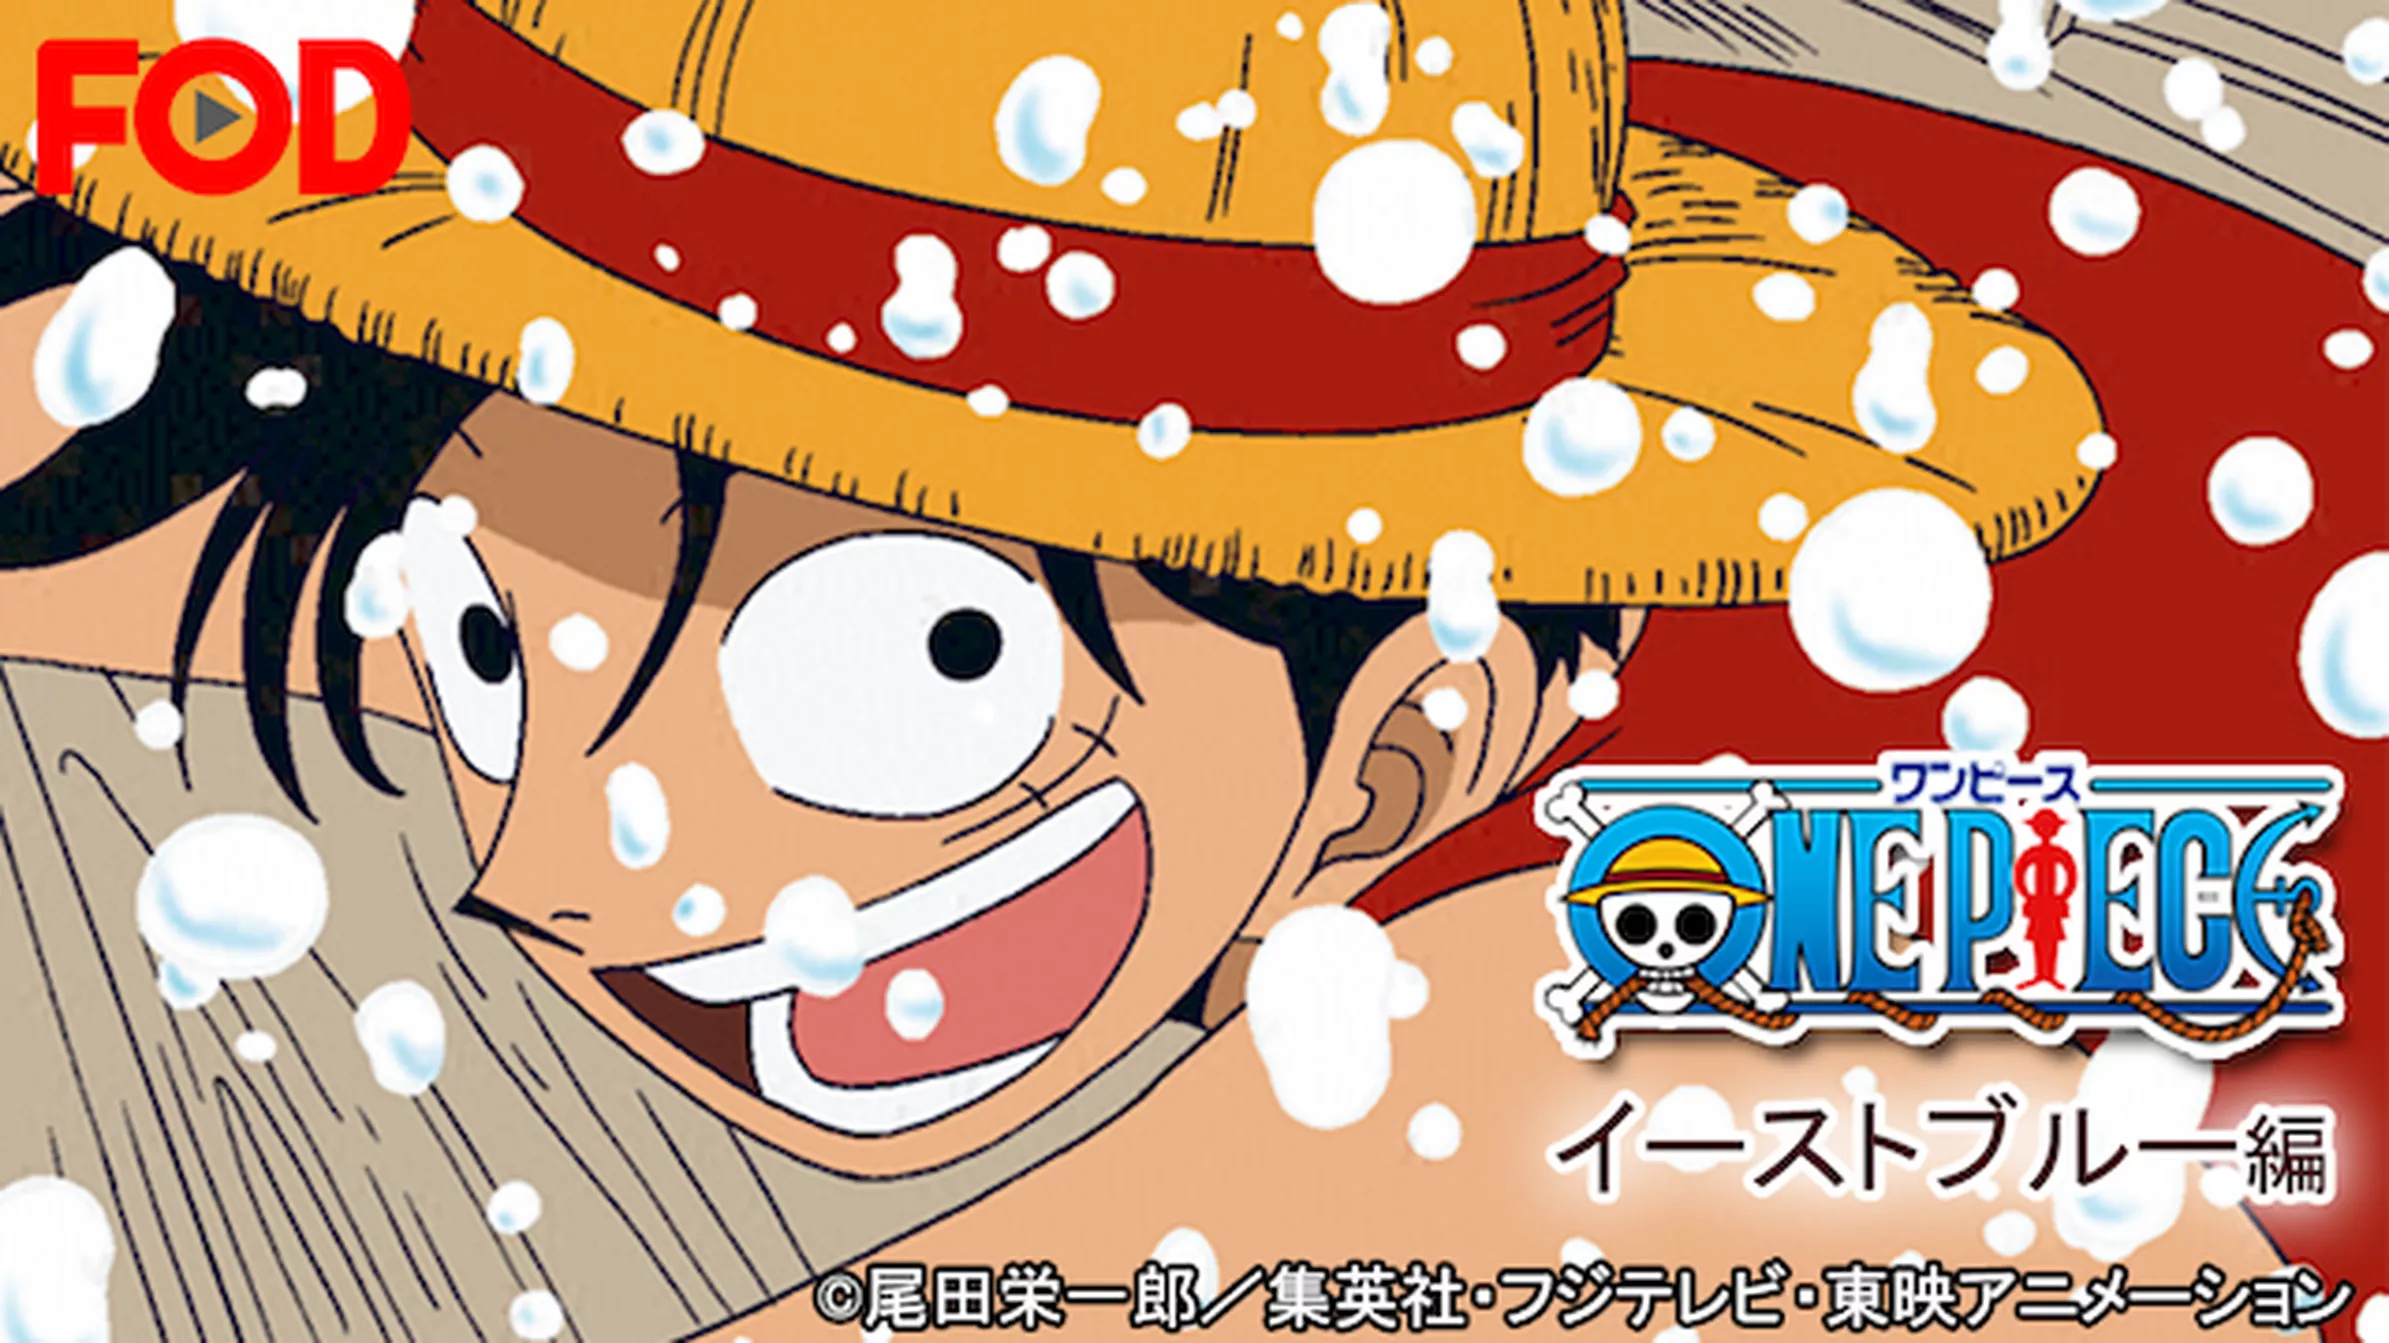 One Piece モノクロ版 マンガ 電子書籍 U Next 初回600円分無料